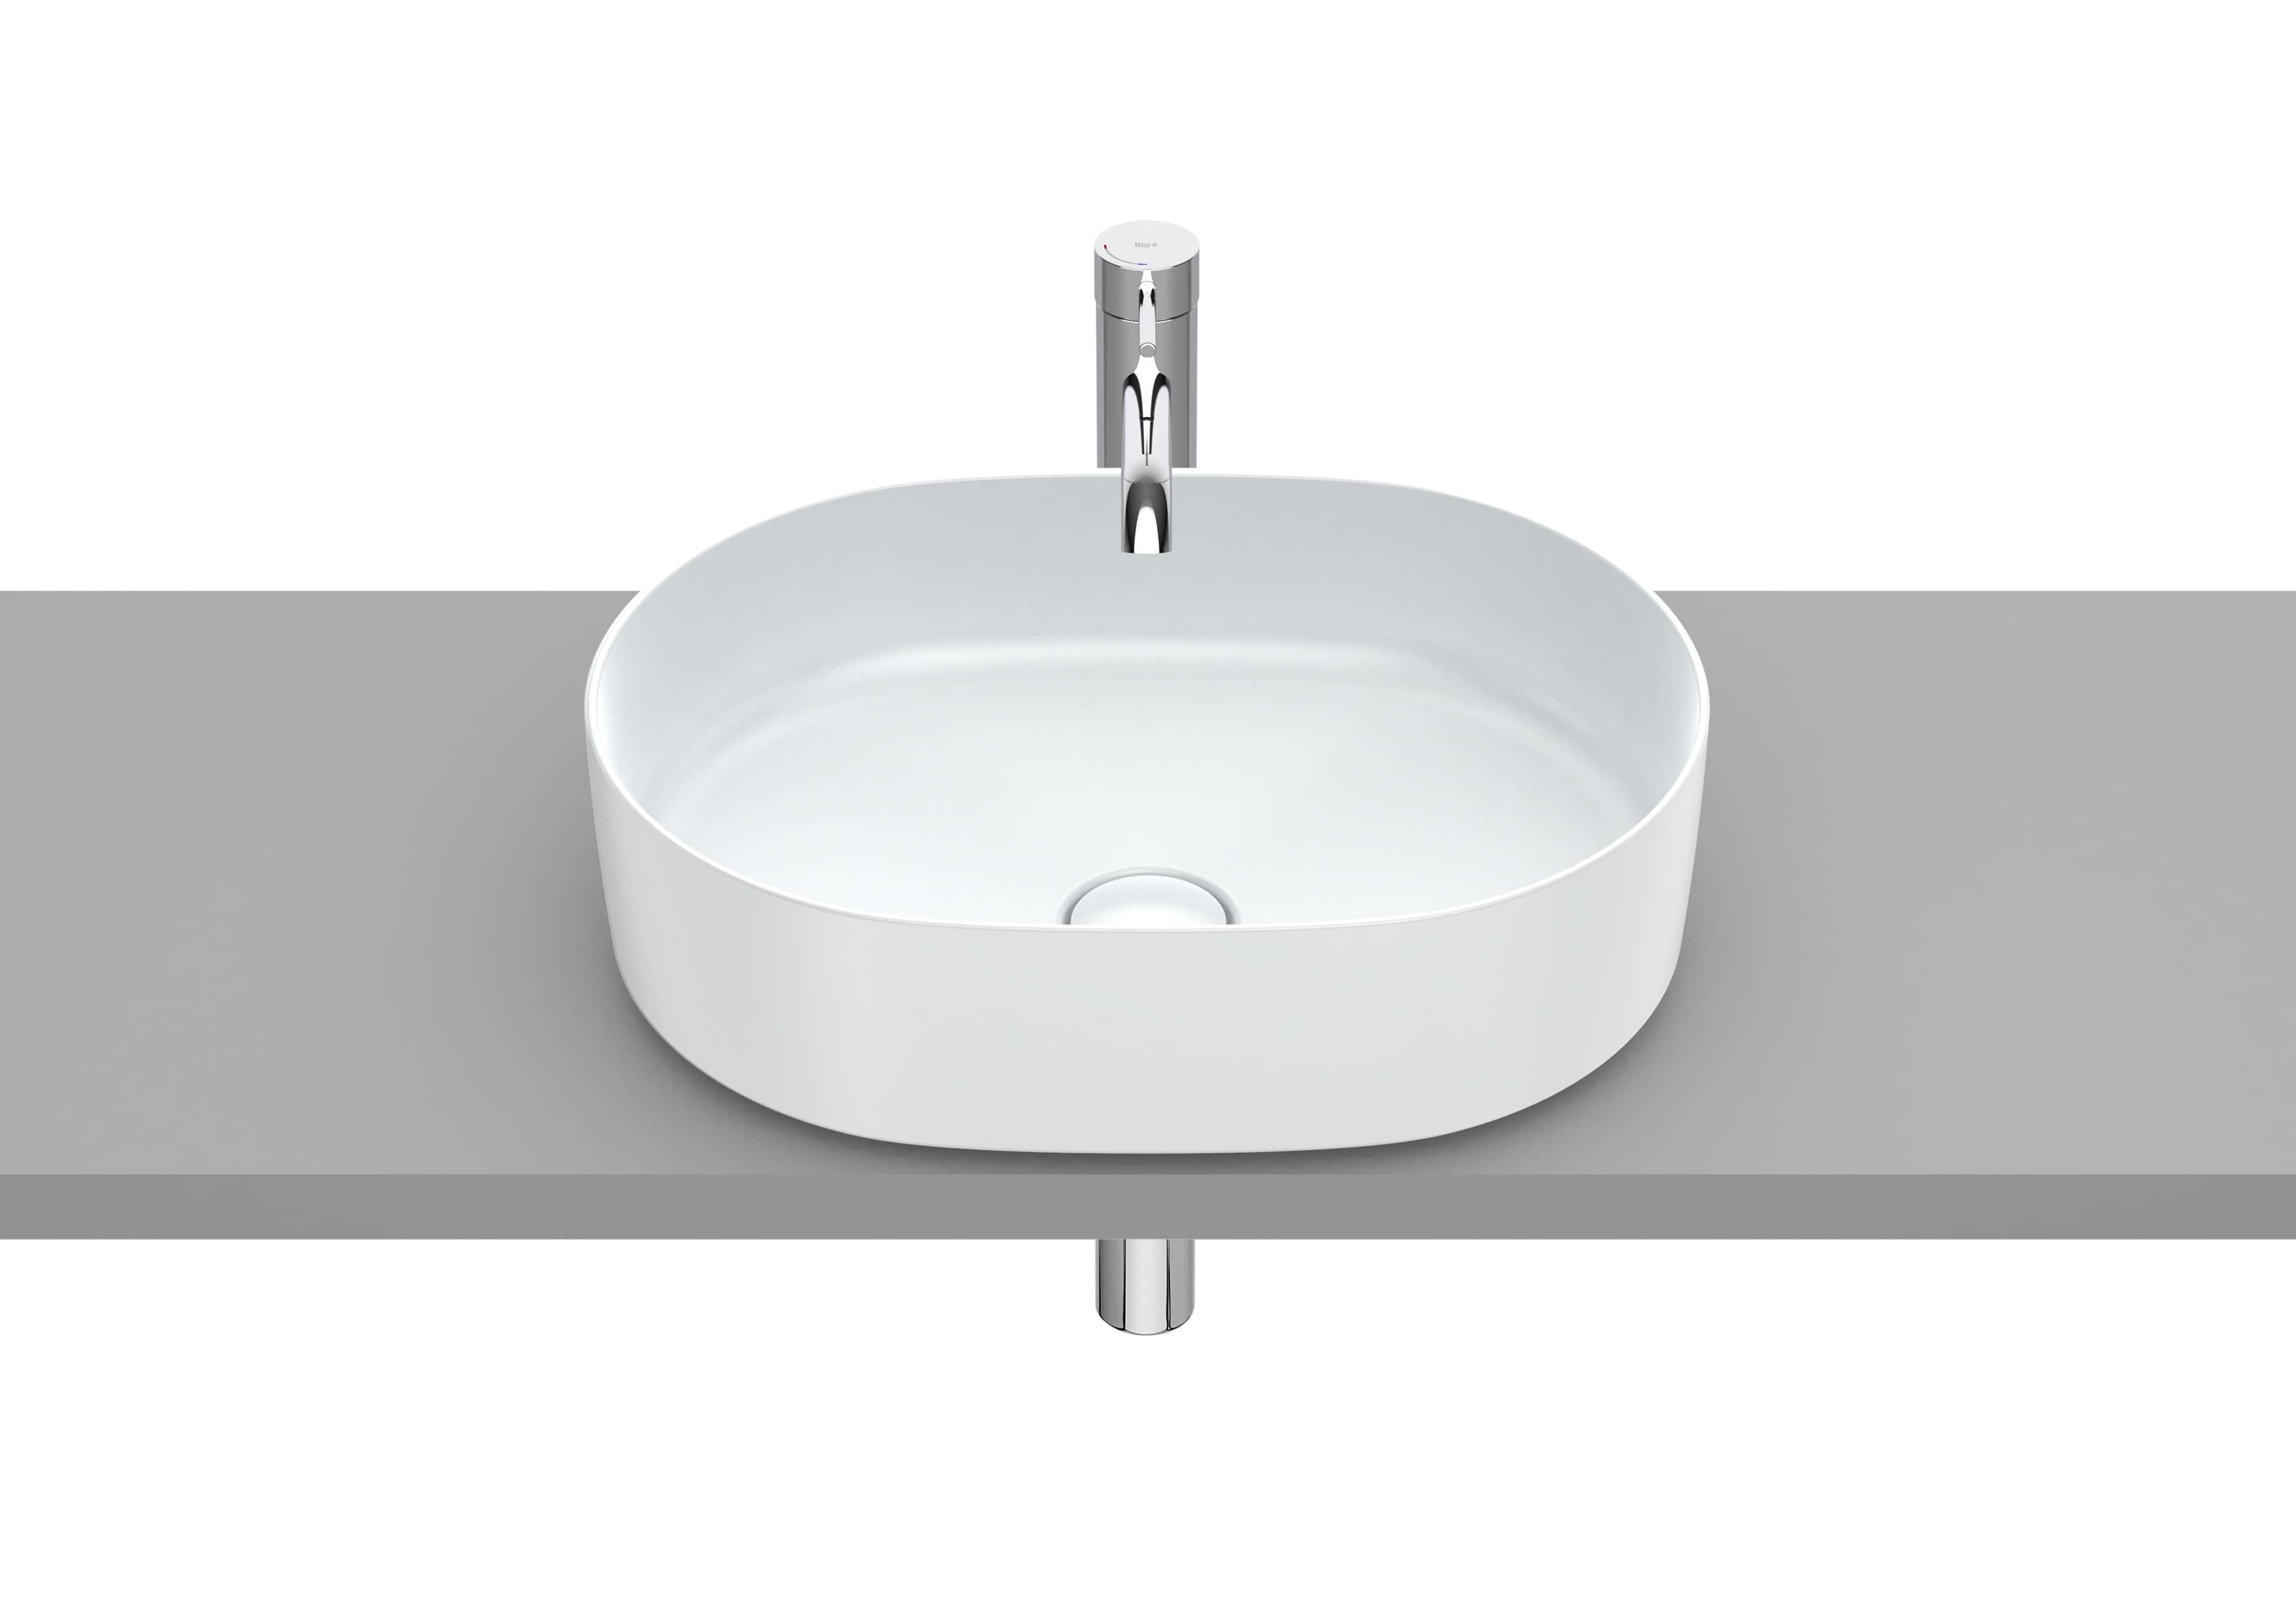 Sanitaire Lavabos INSPIRA A327520000 Vasque à poser rectangulaire Round en FINECERAMIC® Bonde de vidage céramique incluse. Sans trop-plein Roca 3 - Mirage ceramica